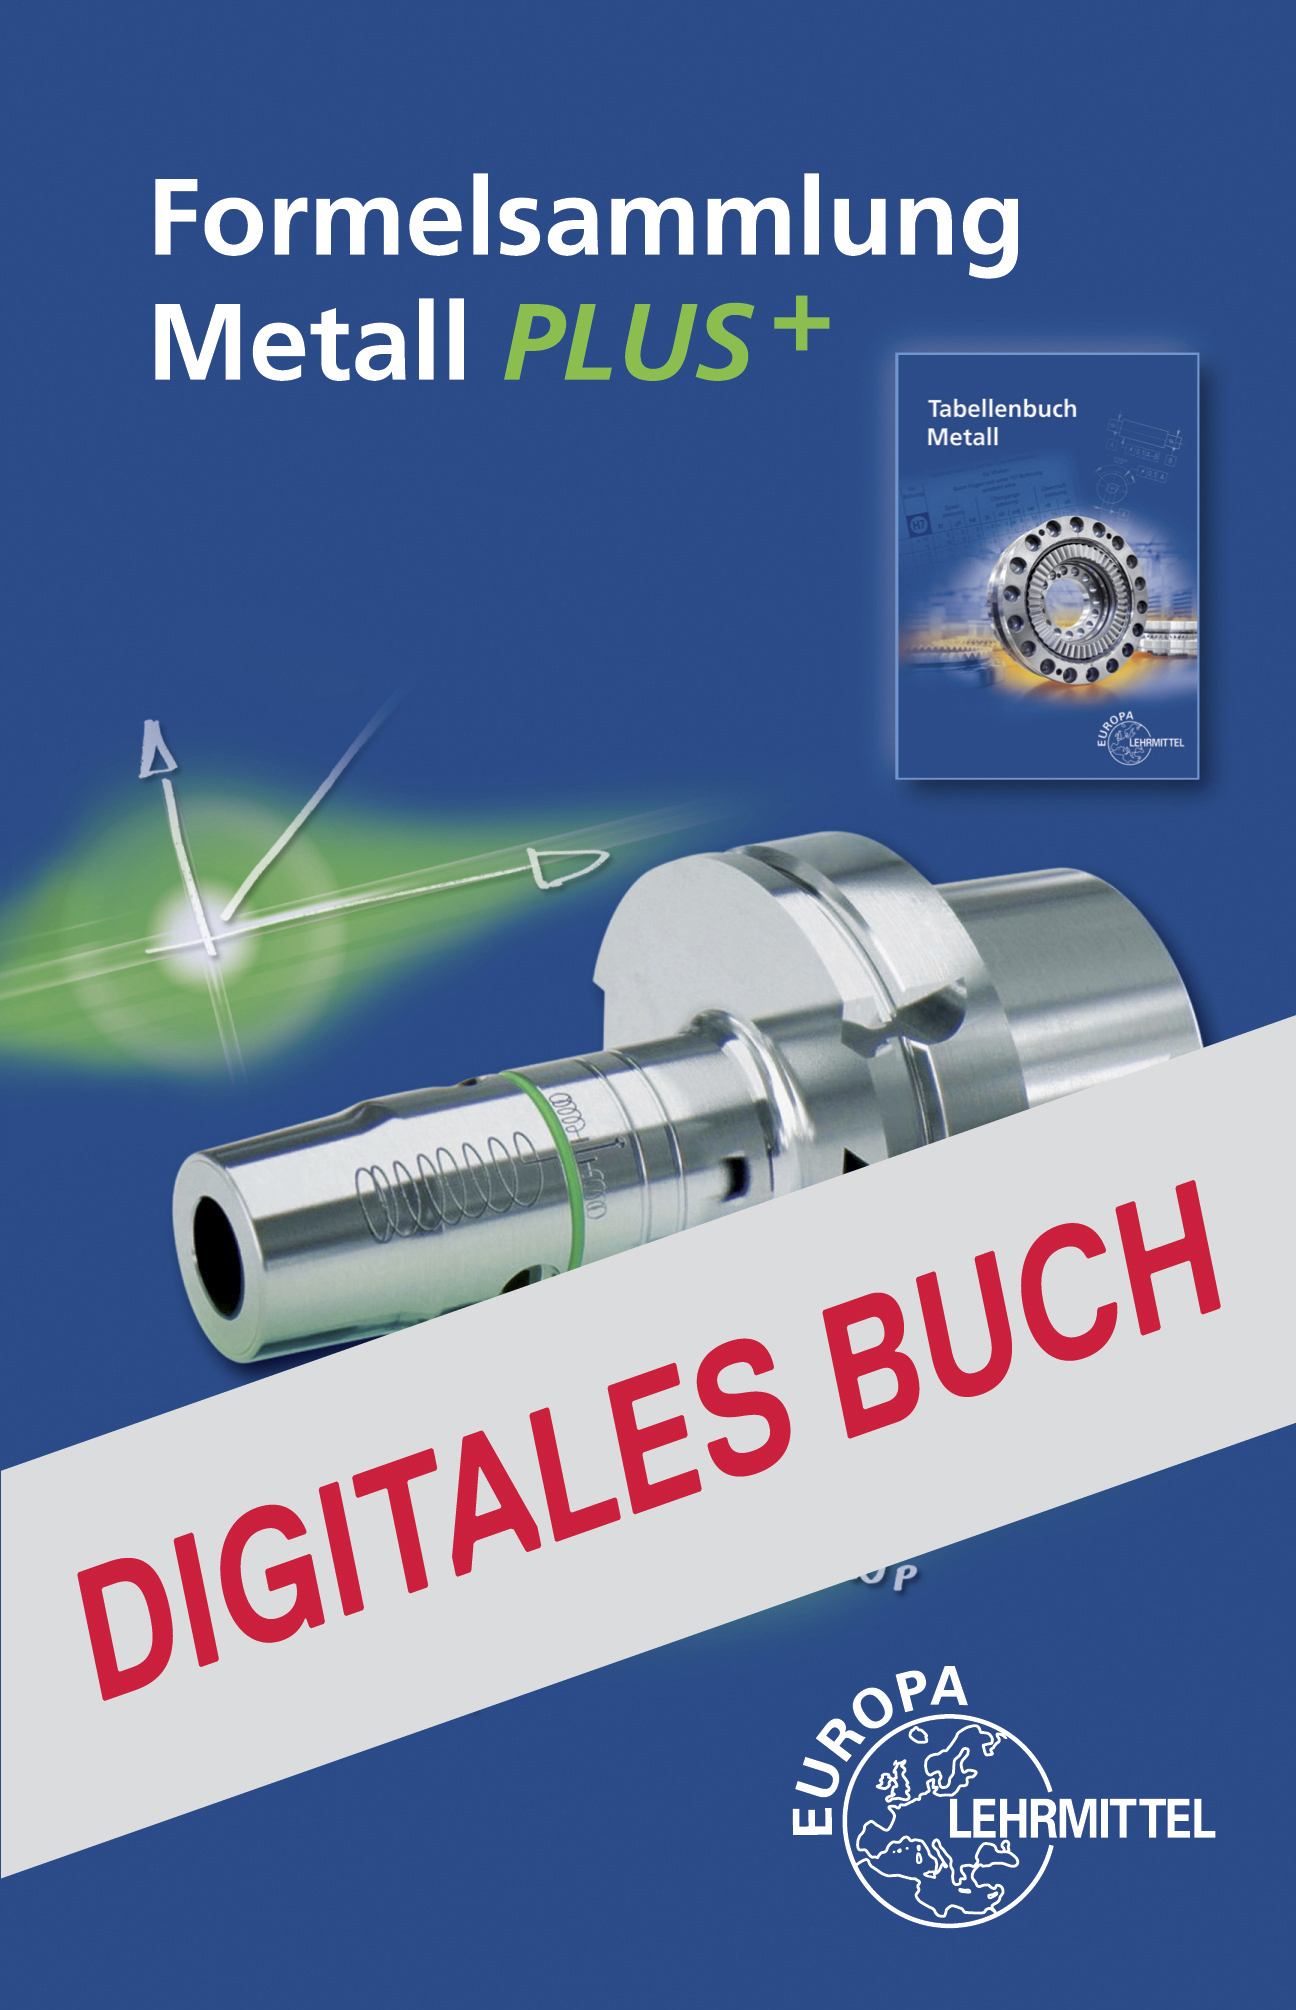 Formelsammlung Metall PLUS+ Digitales Buch